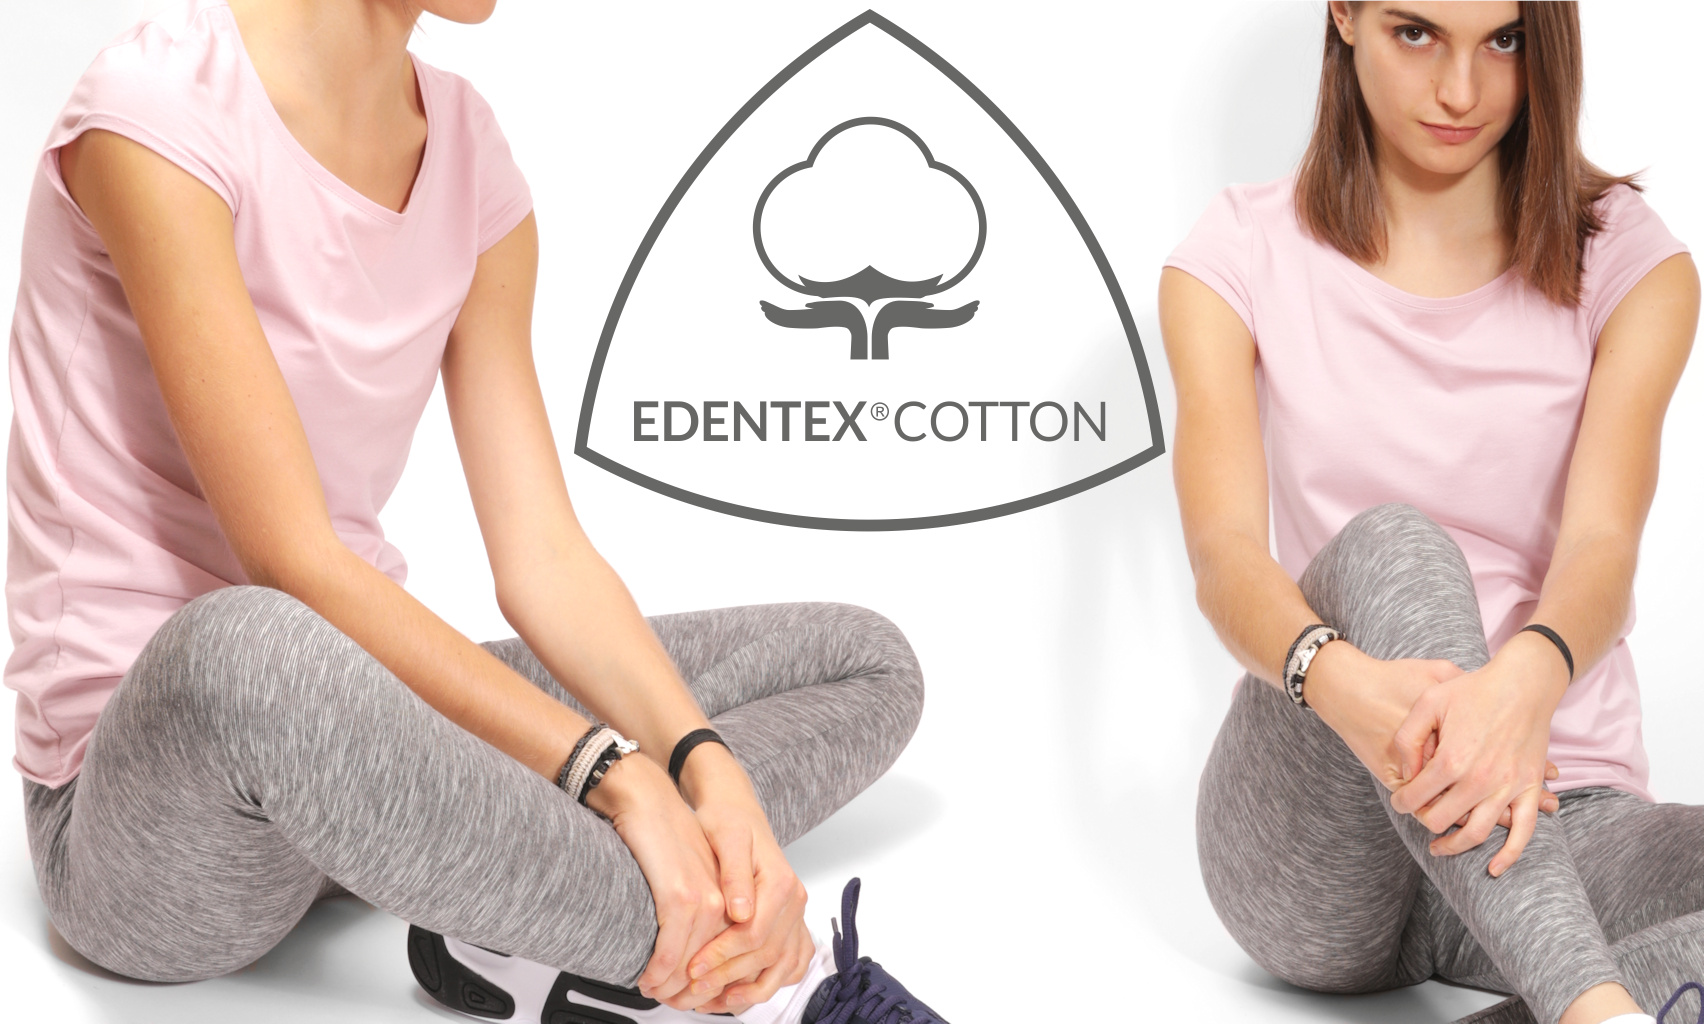 EDENTEX®COTTON: Perfect flexibility